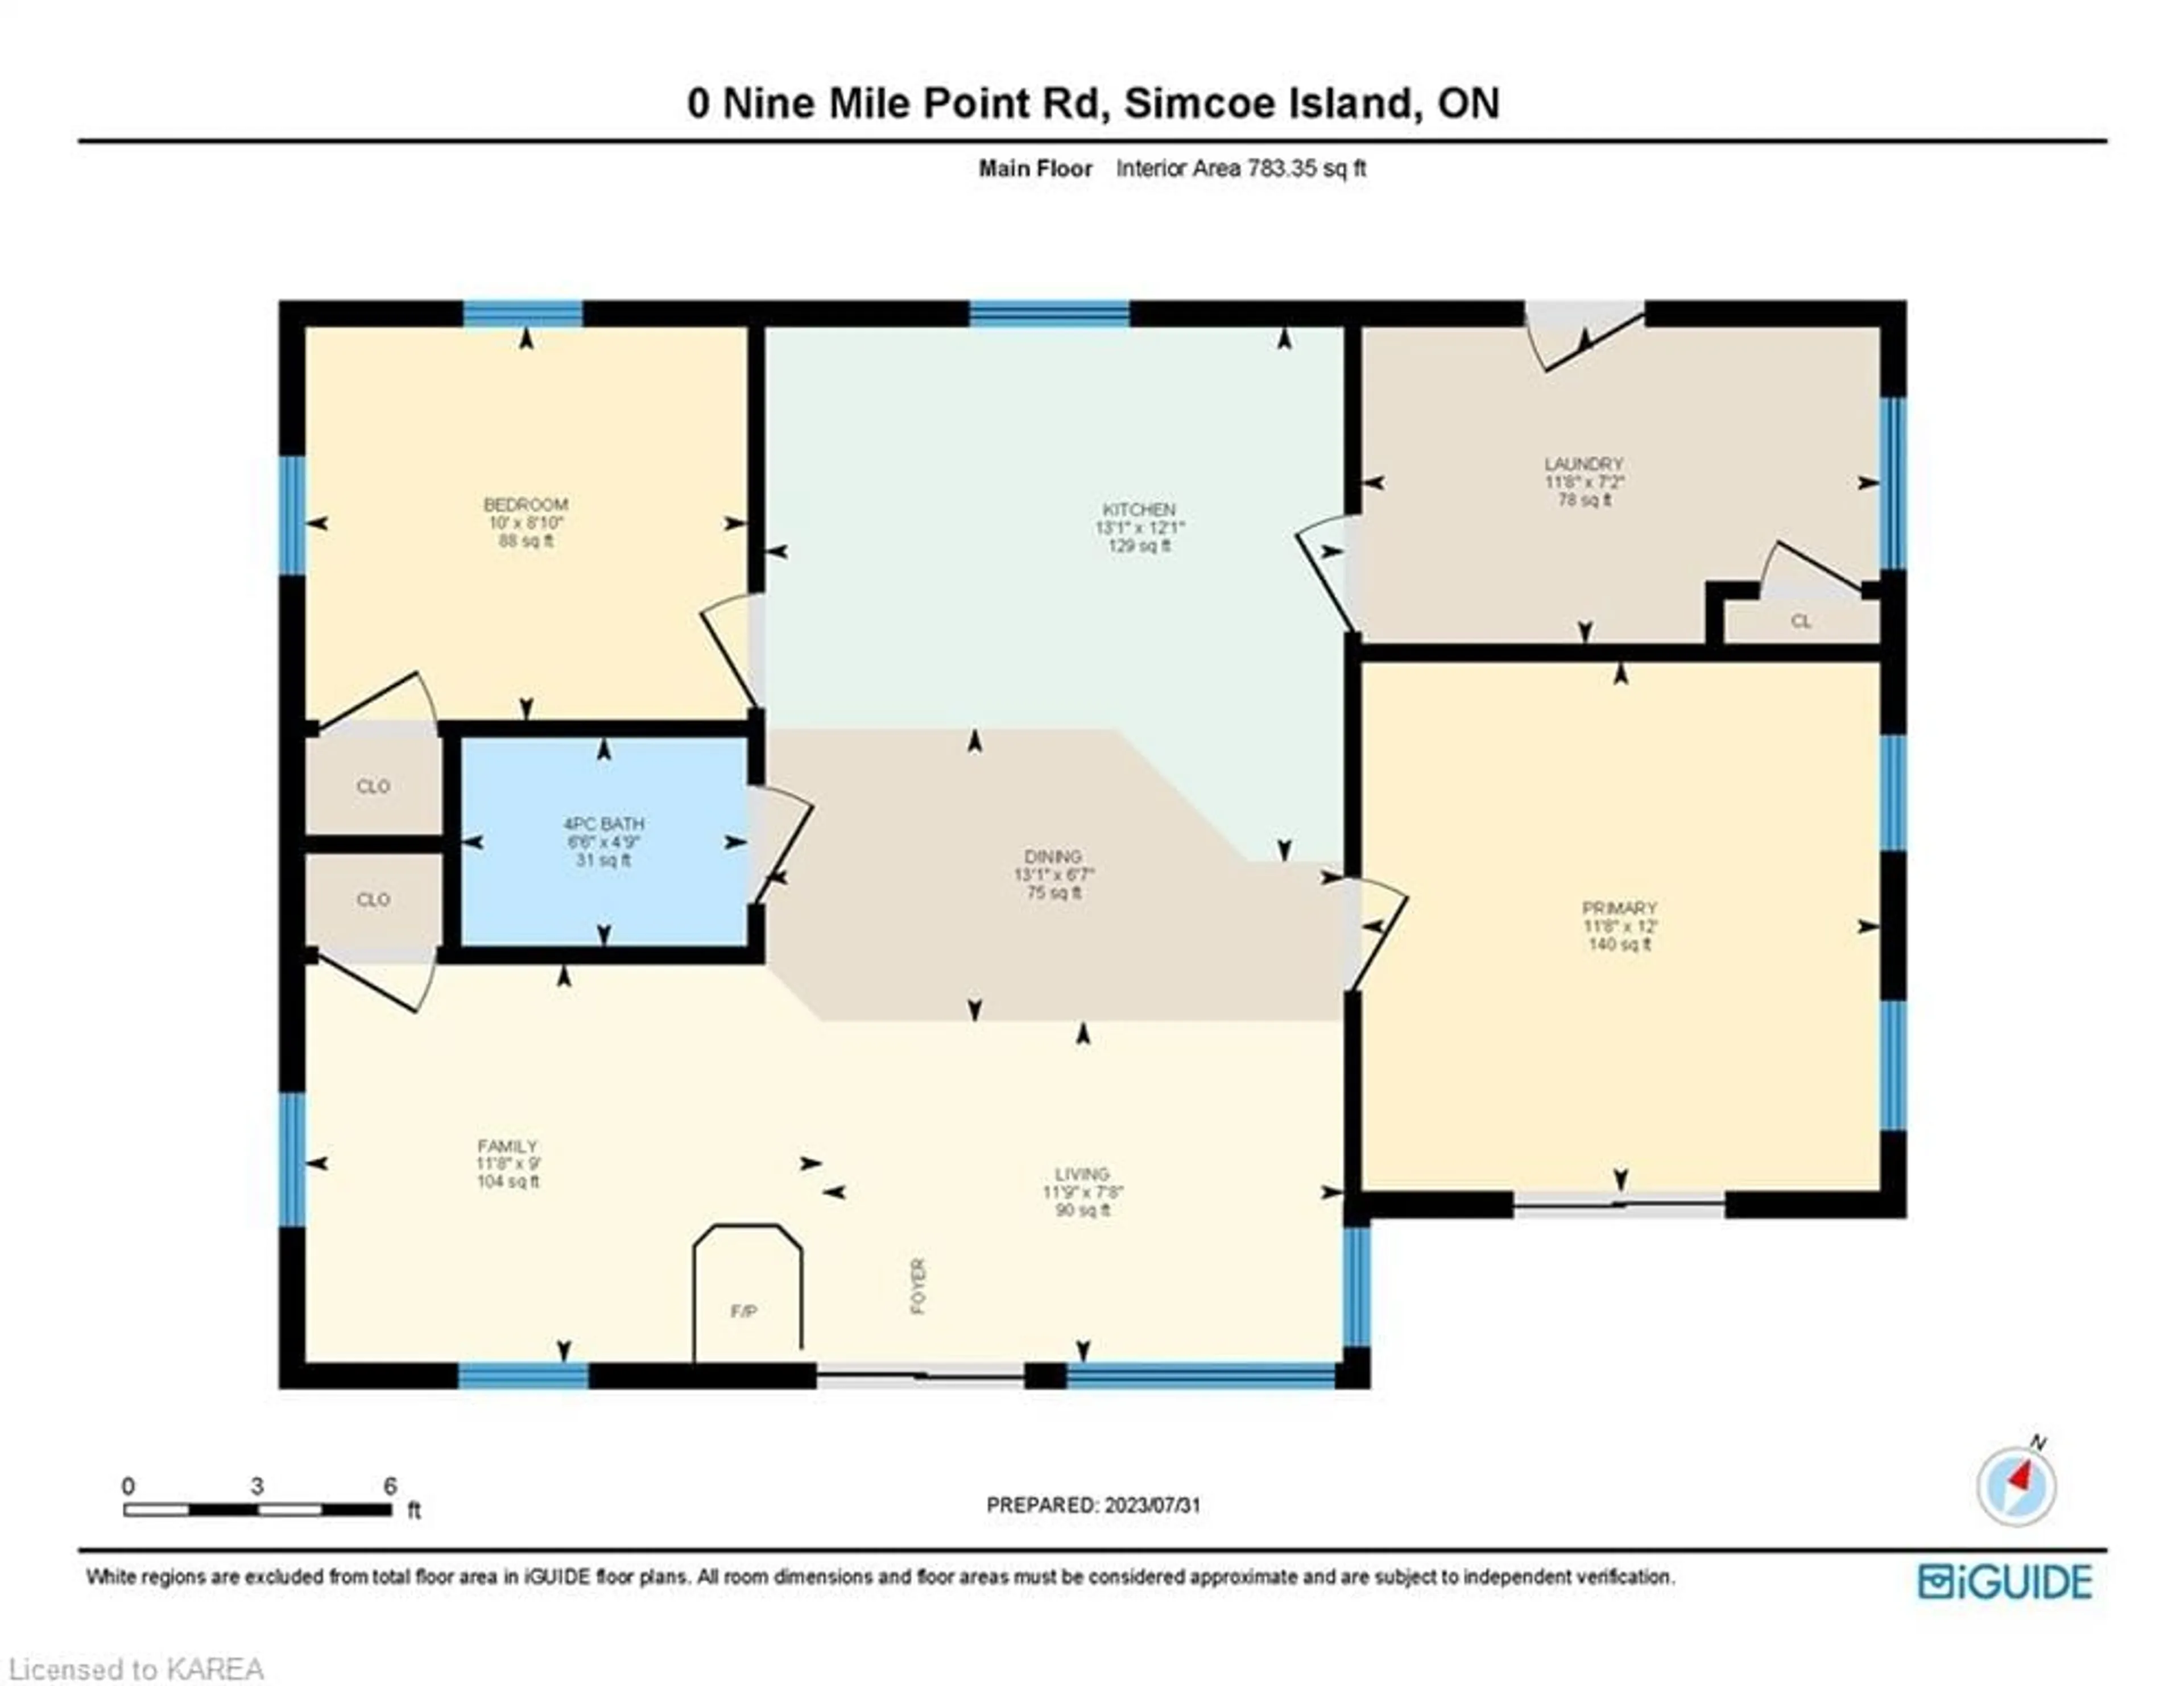 Floor plan for 543 Nine Mile Point Rd, Simcoe Ontario K0H 2Y0